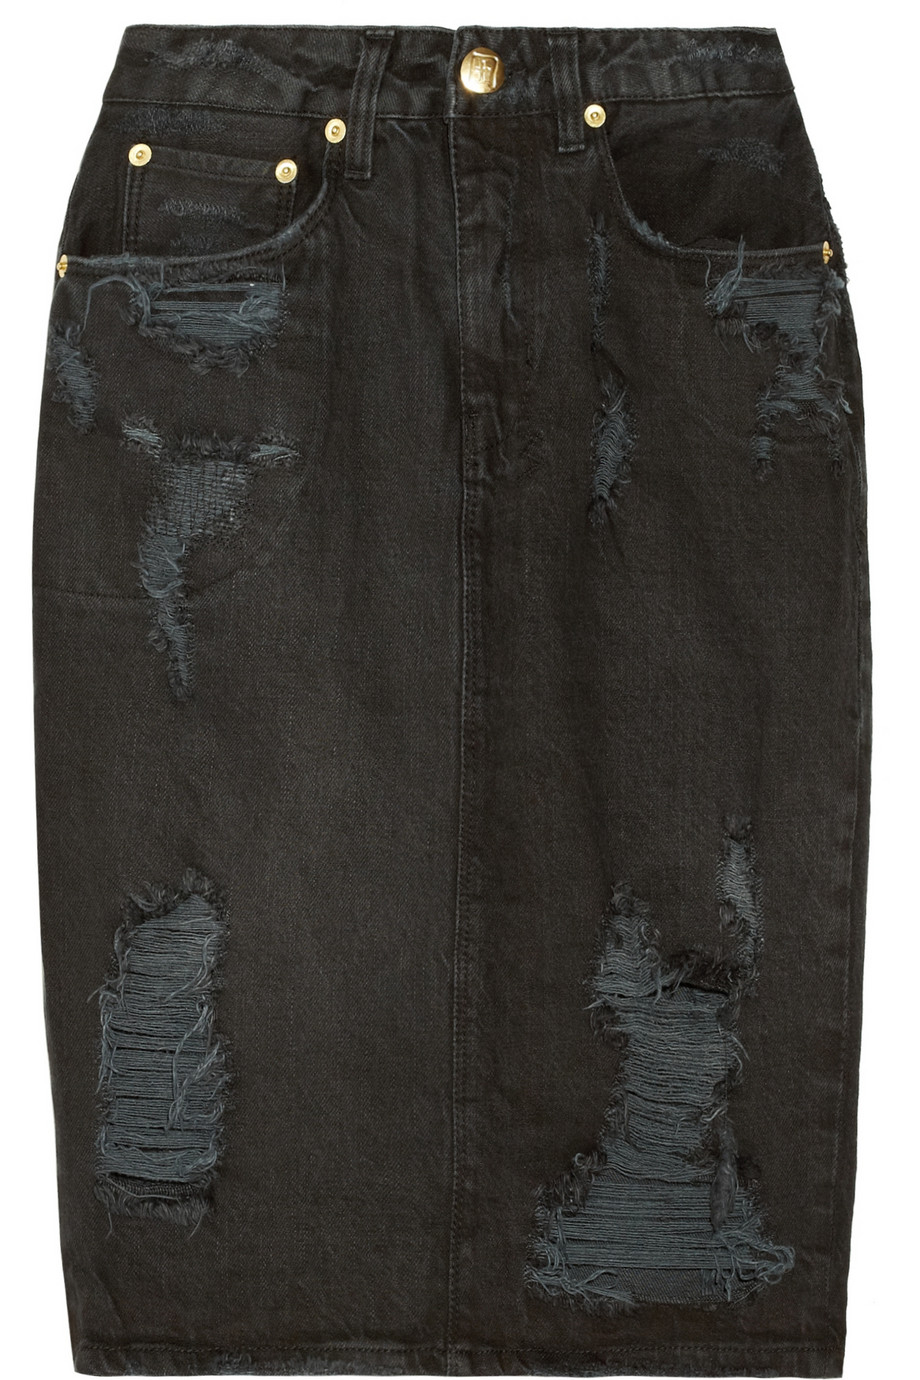 Ksubi Distressed Denim Skirt in Black | Lyst